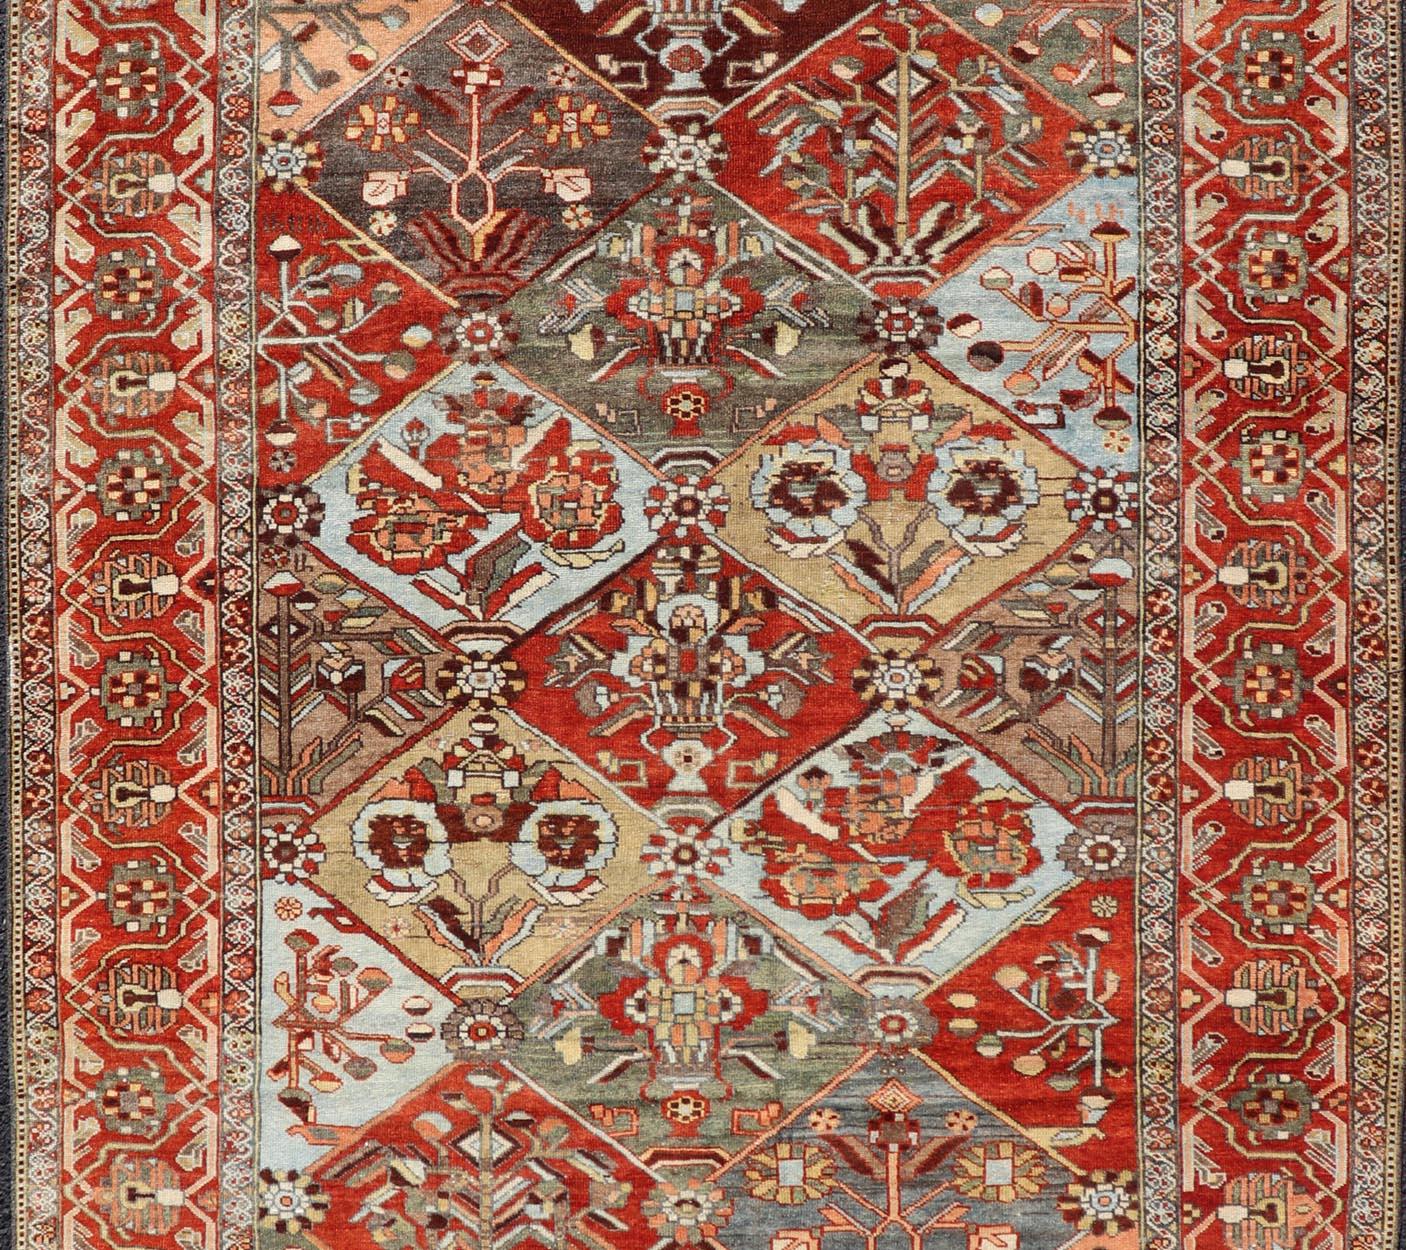 Antique Persian Bakhitari Colorful Rug in All-Over Diamond Garden Design  In Good Condition For Sale In Atlanta, GA